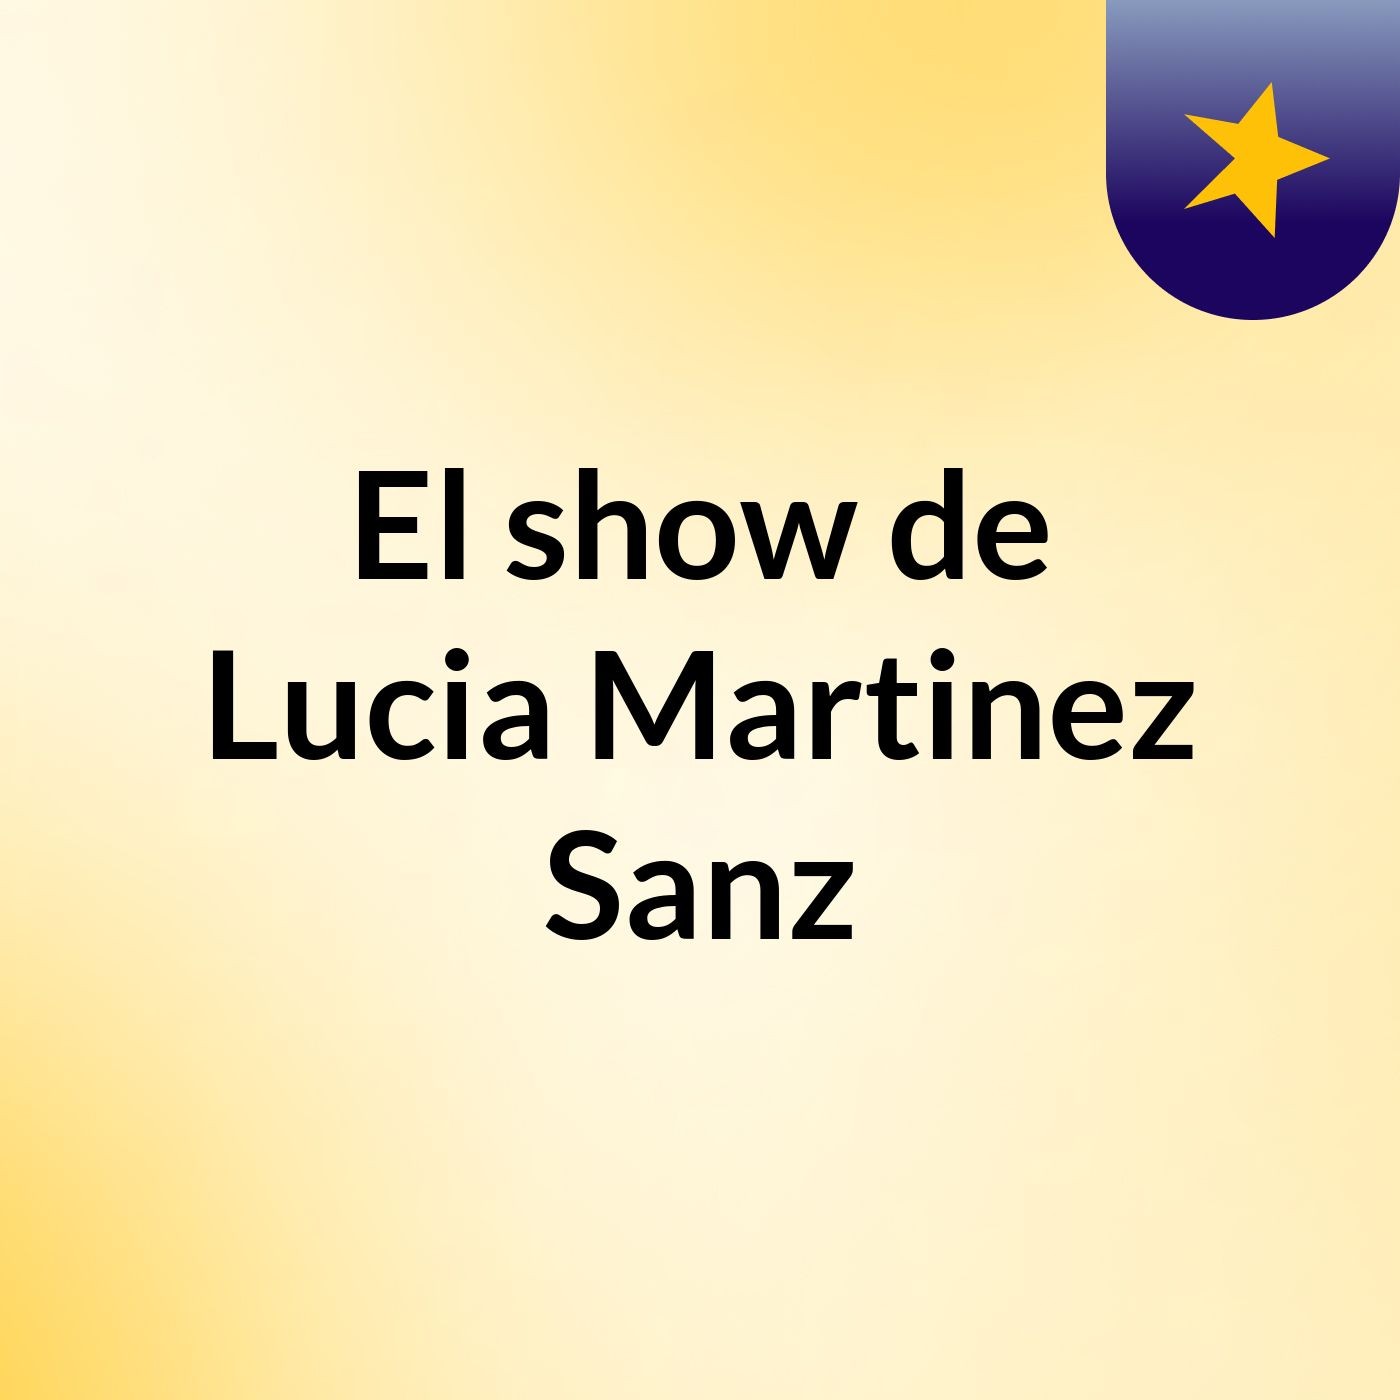 Episodio 2 - El show de Lucia Martinez Sanz